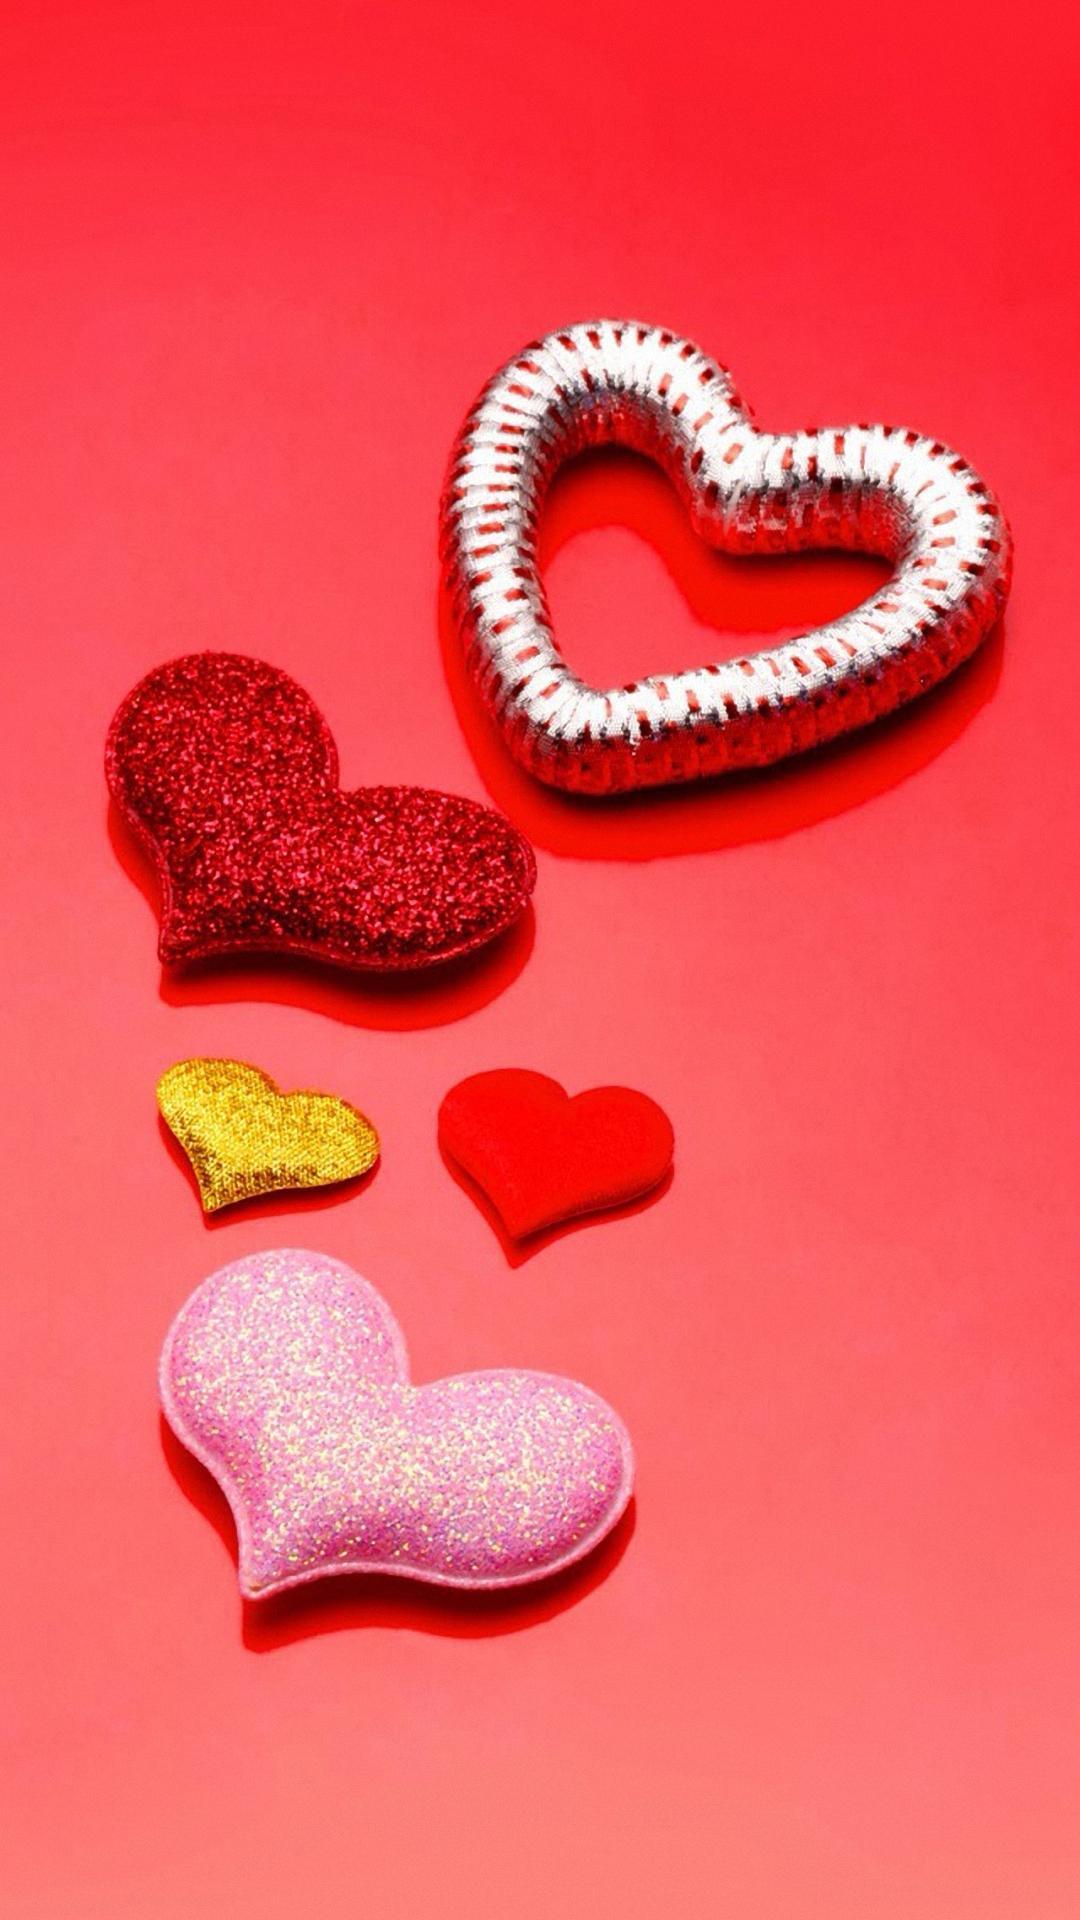 Love Heart Android Wallpaper 1080p Phone Mobile Full